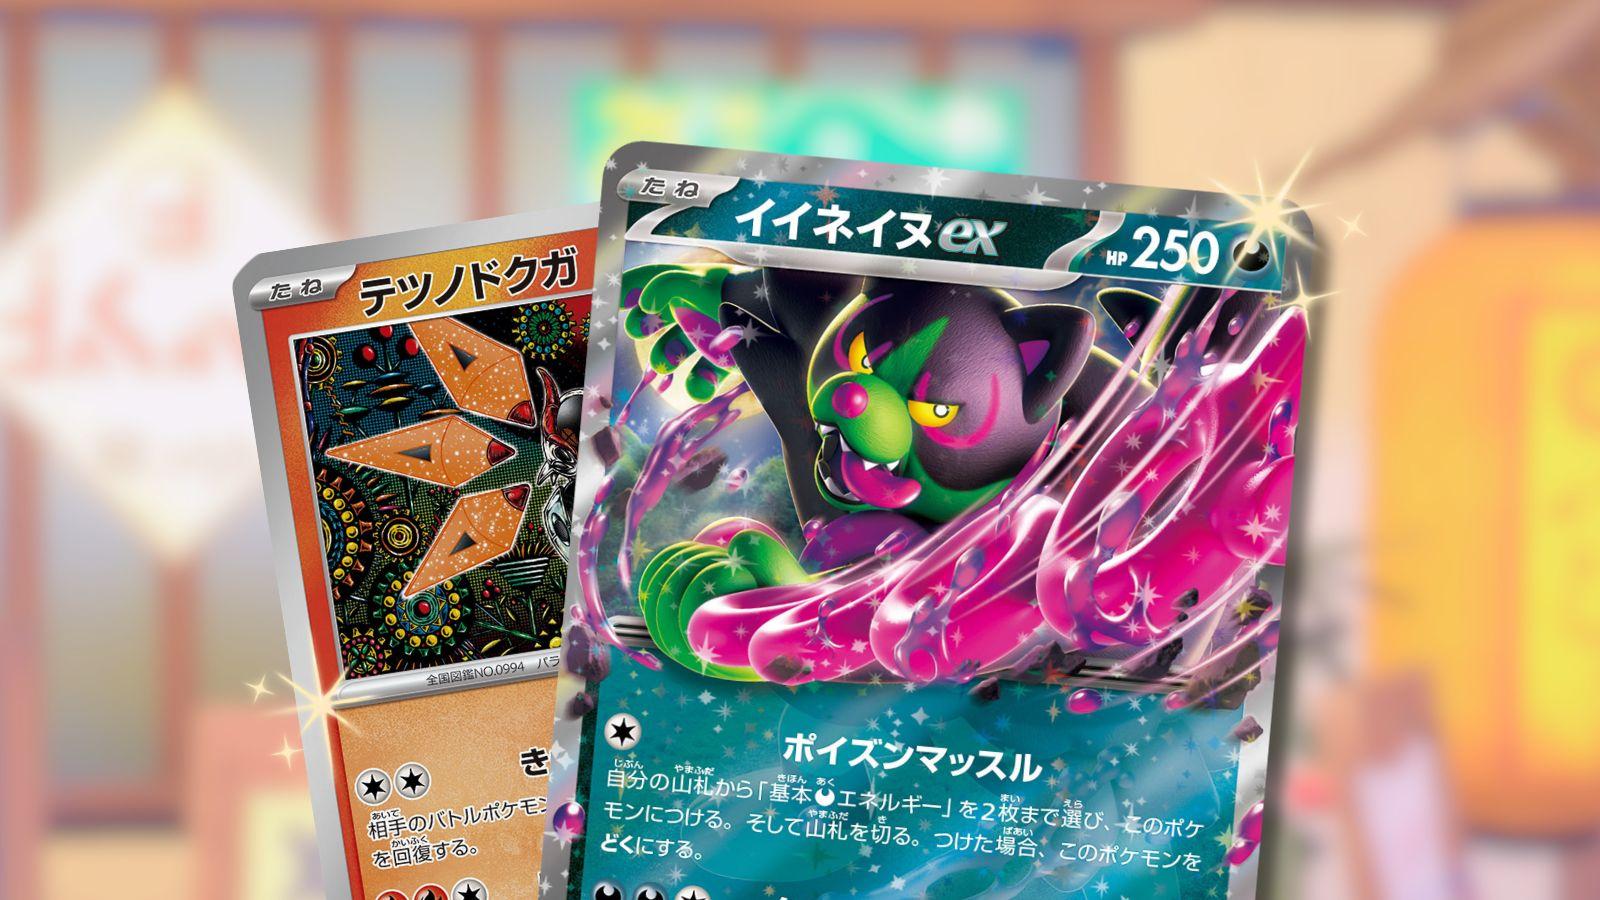 Okidogi and Iron Moth Pokemon cards with Teal Mask background.